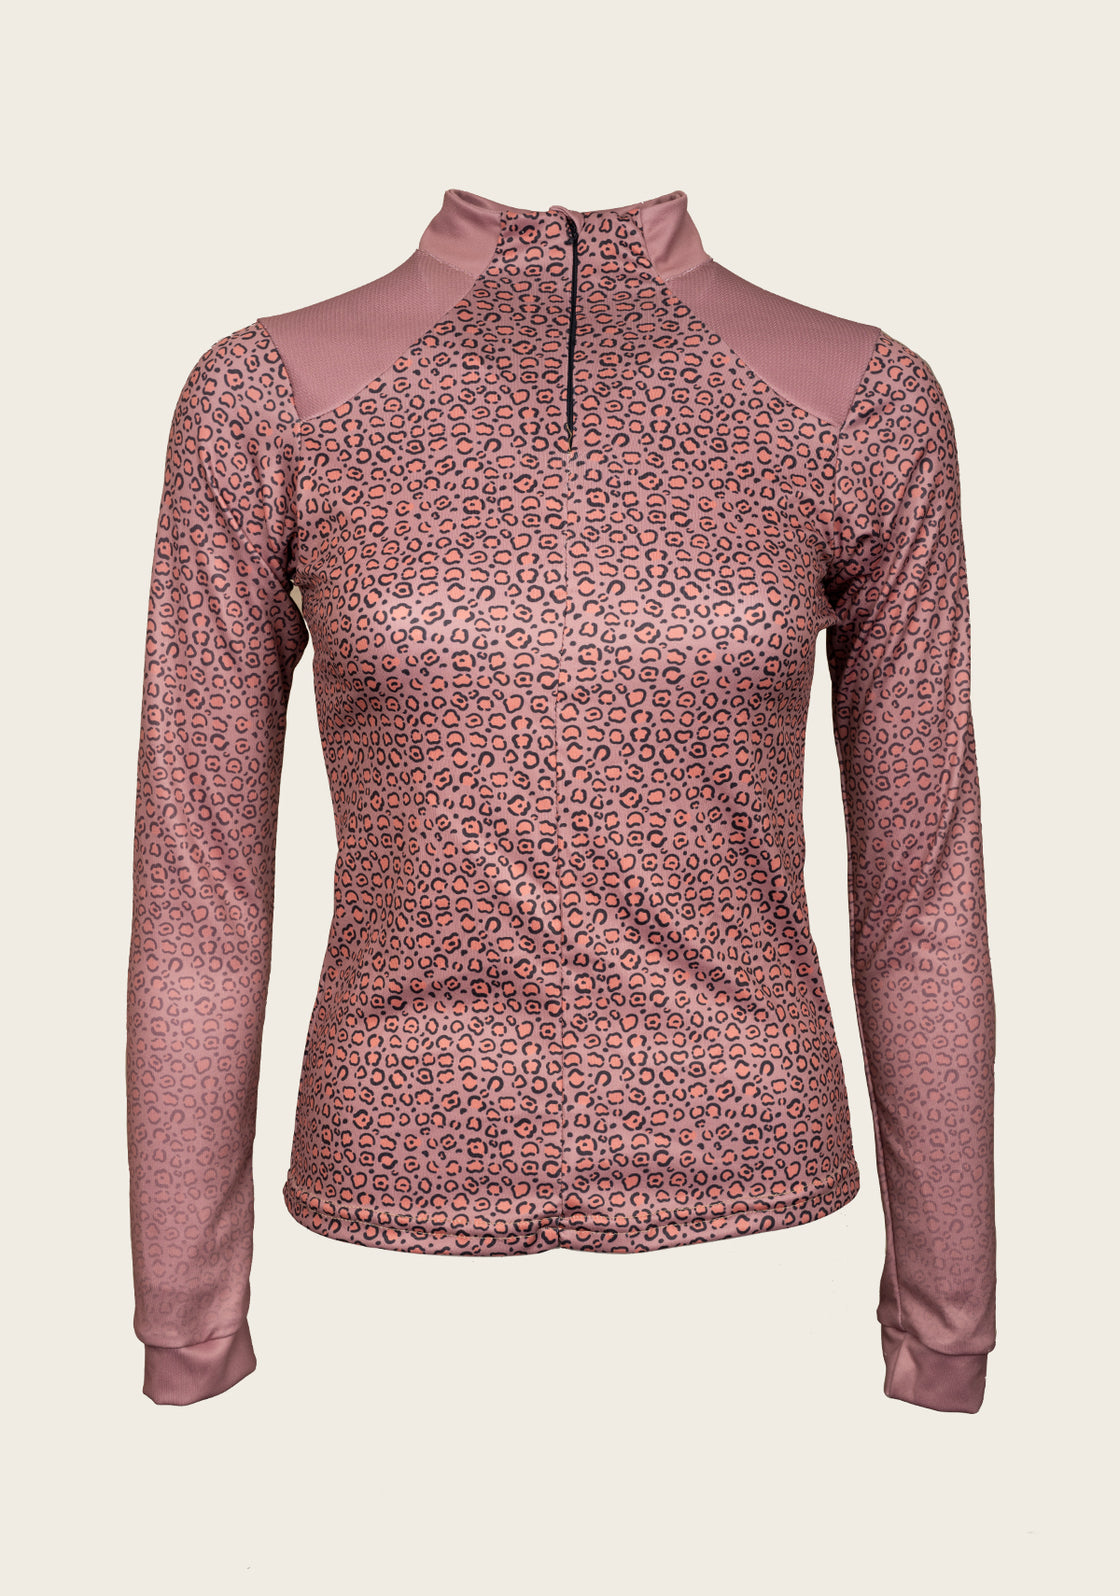 Leopard in Rose Sport Sun Shirt